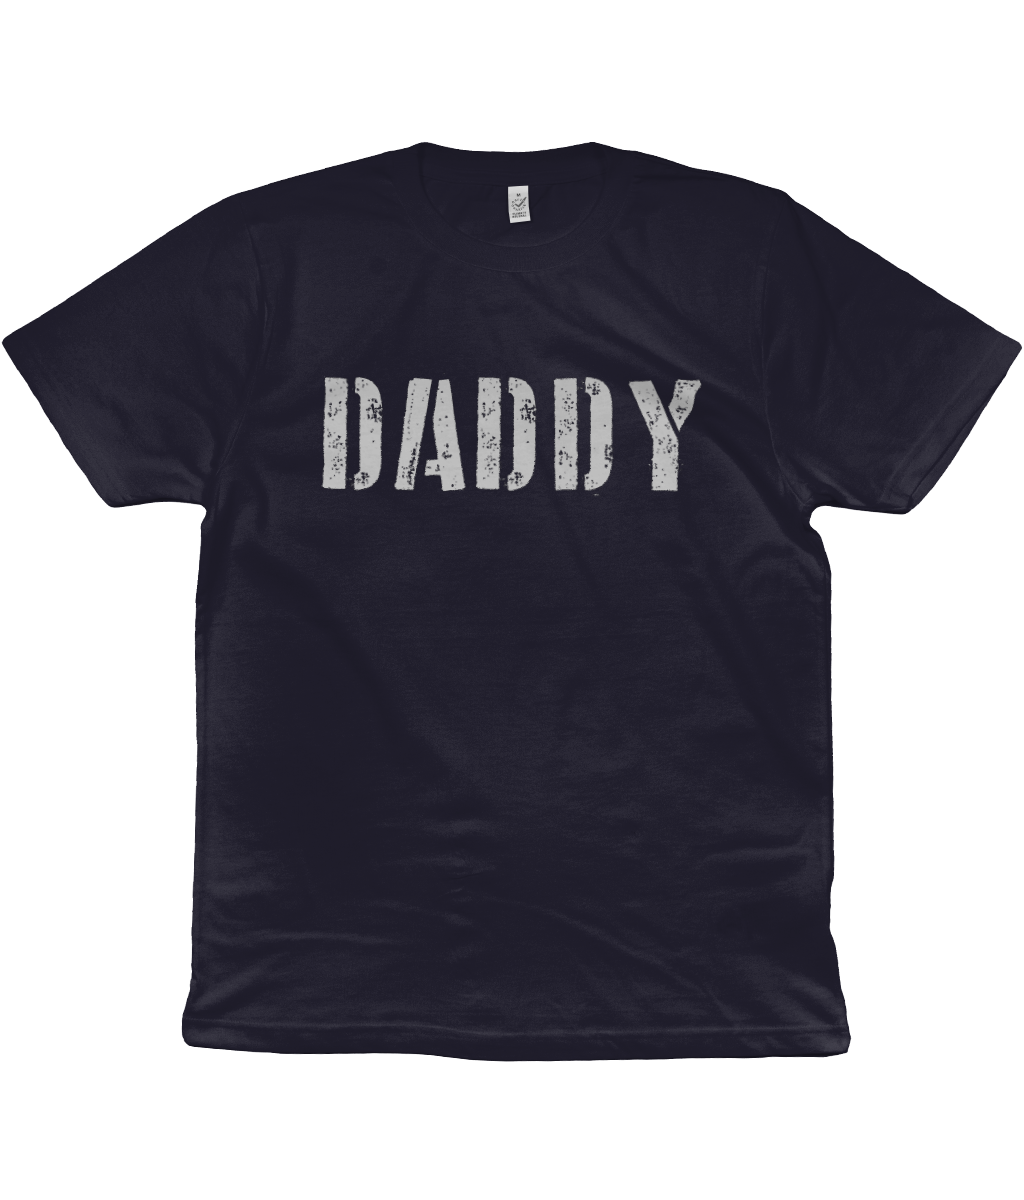 Navy Daddy Organic Cotton T-Shirt 